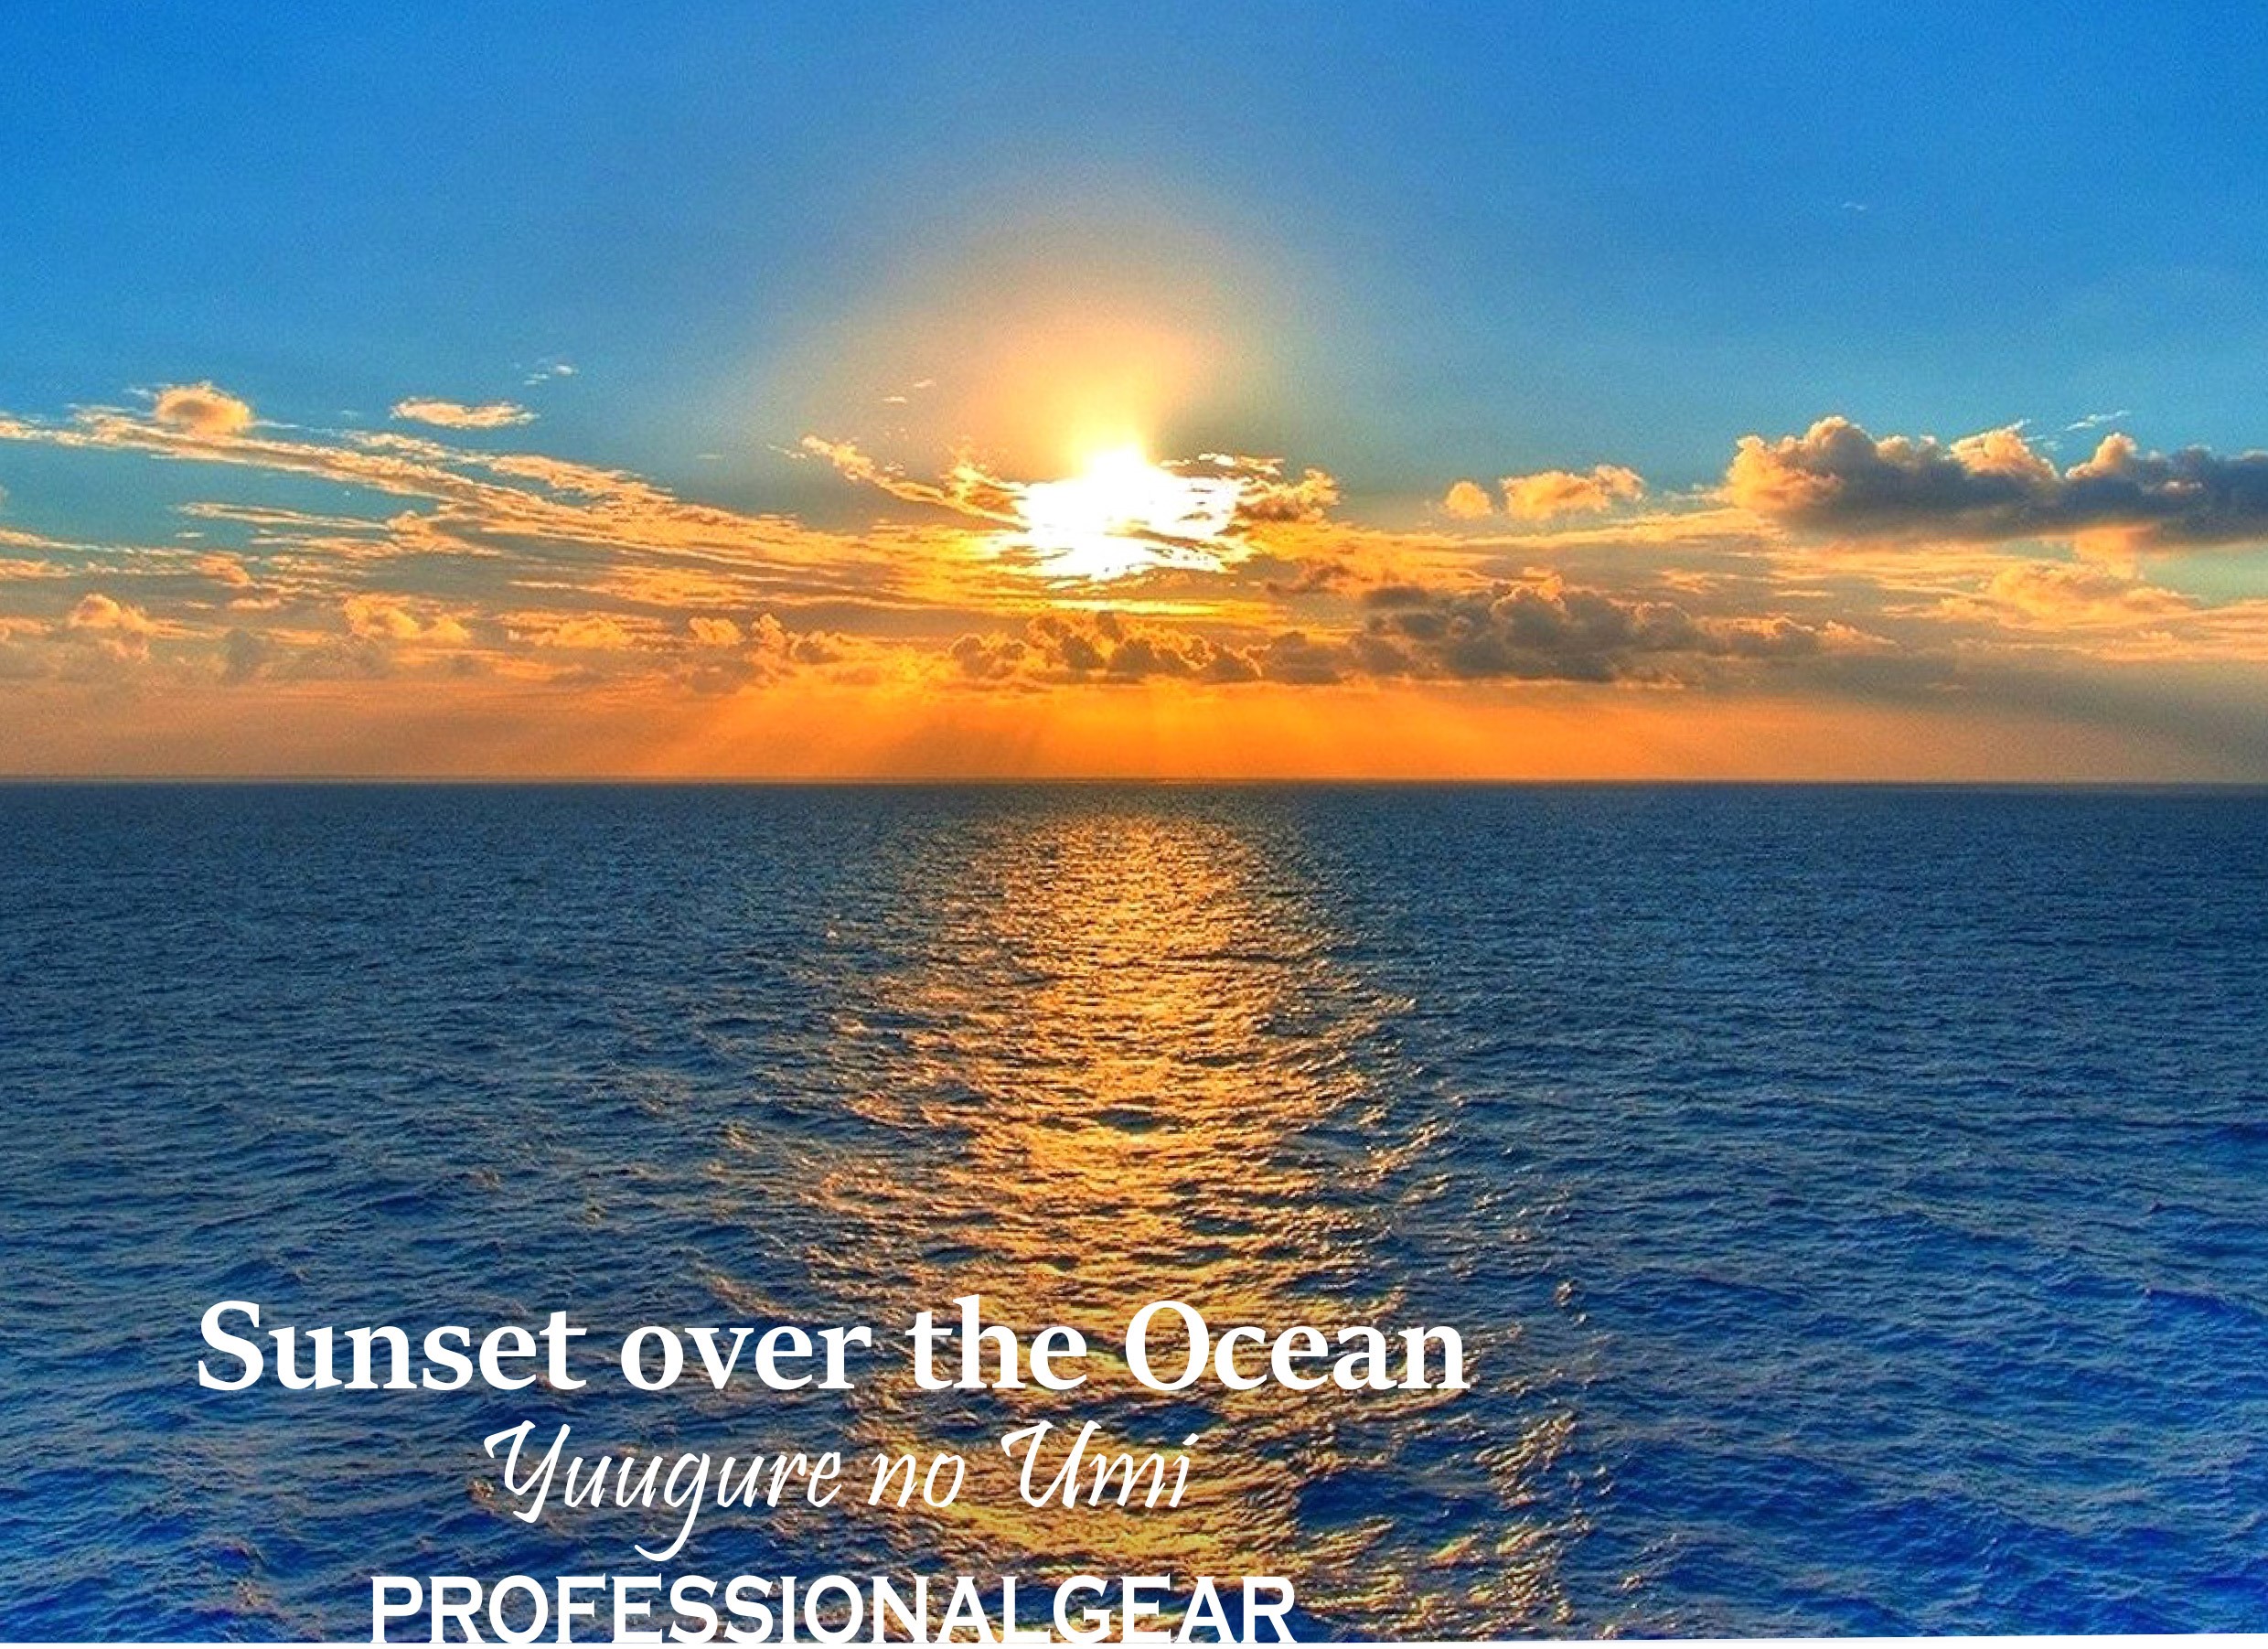 Sailor Professional Gear Slim "Sunset over the ocean" - F Nib